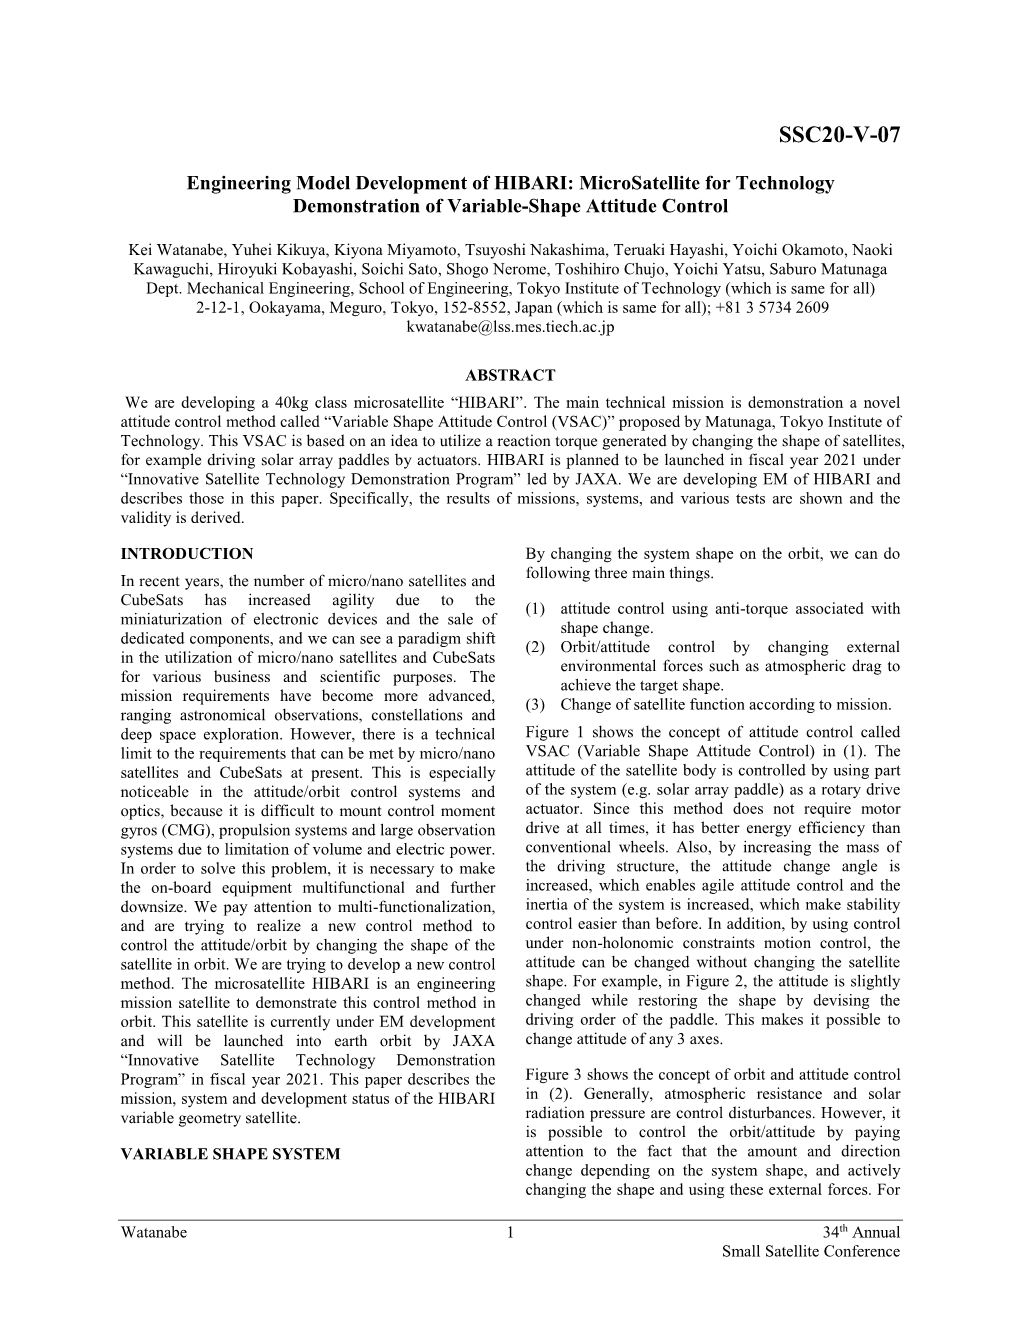 Engineering Model Development of HIBARI: Microsatellite for Technology Demonstration of Variable-Shape Attitude Control